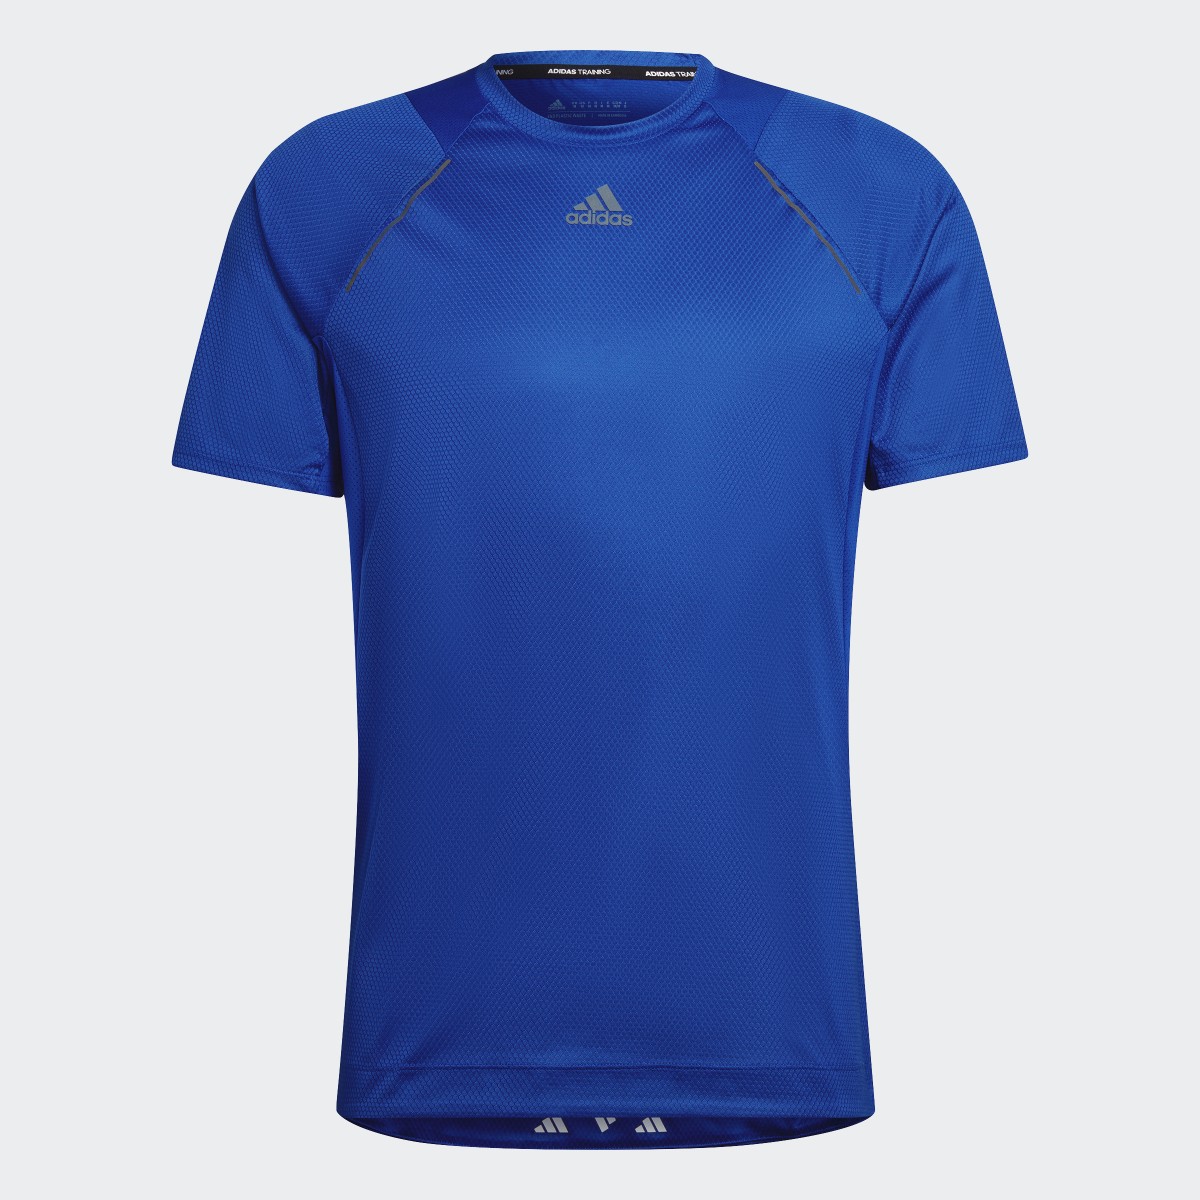 Adidas HIIT Spin Training T-Shirt. 5